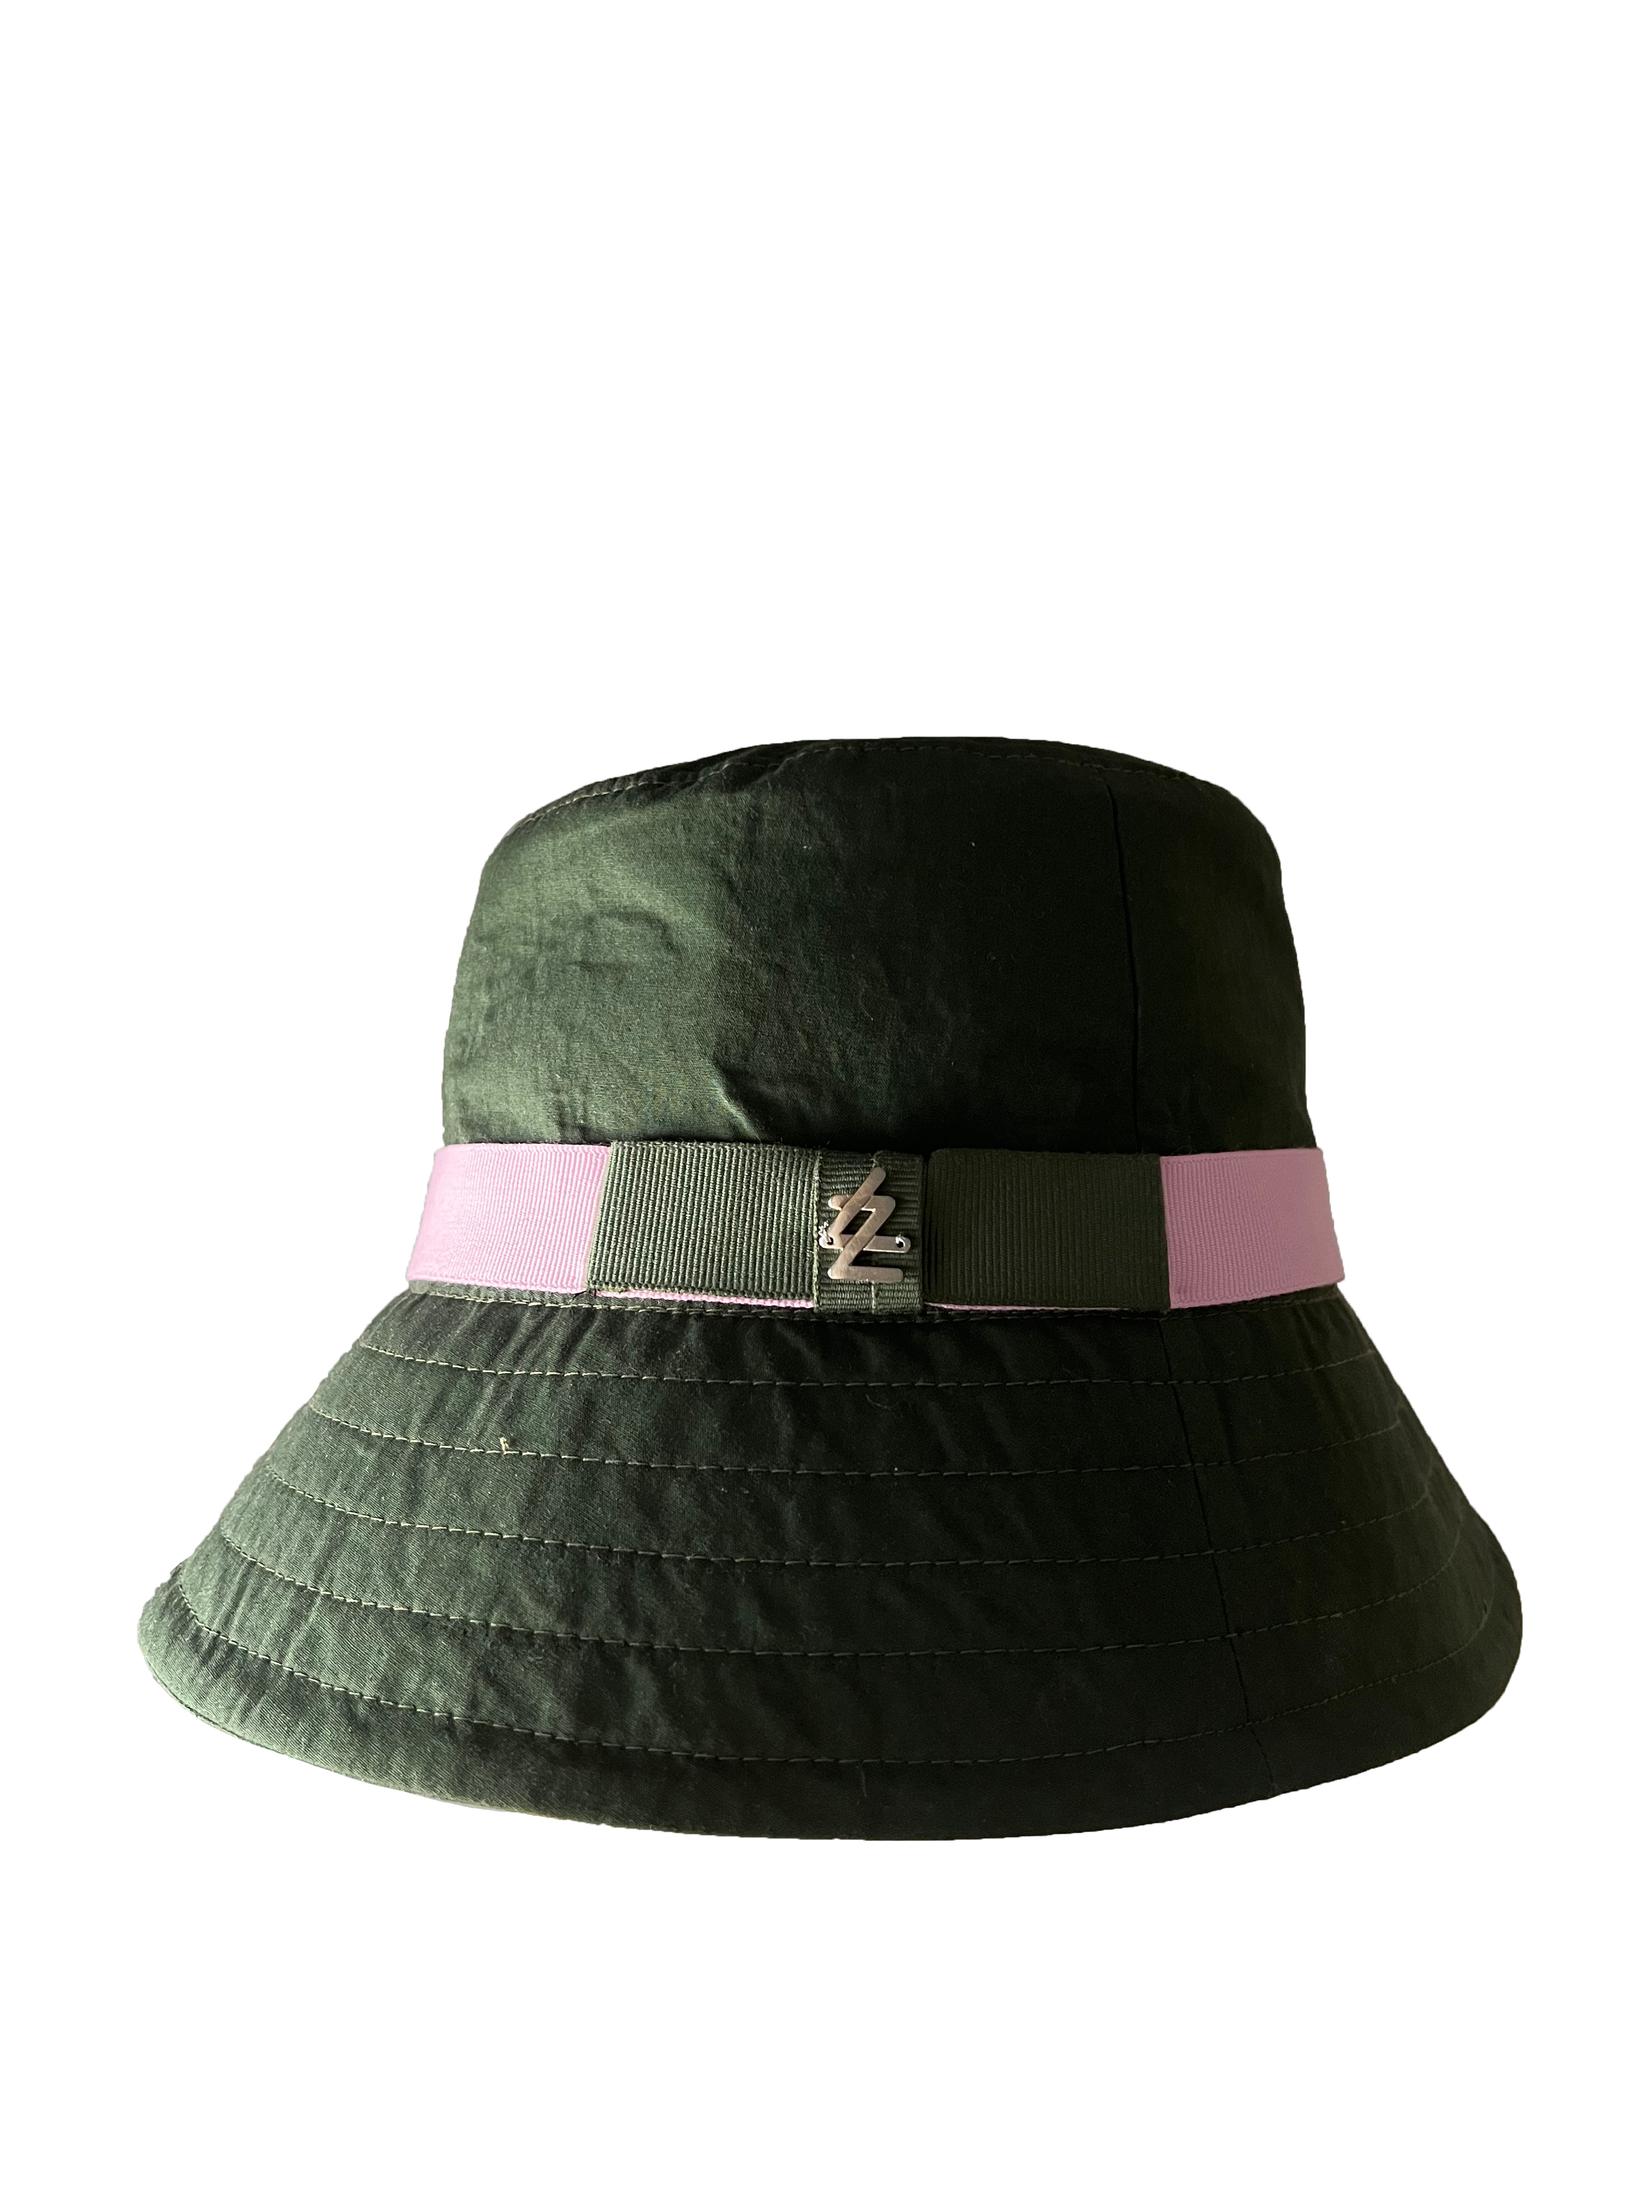 LA ZAR HATS Bucket hat šešir sa mašnom crna